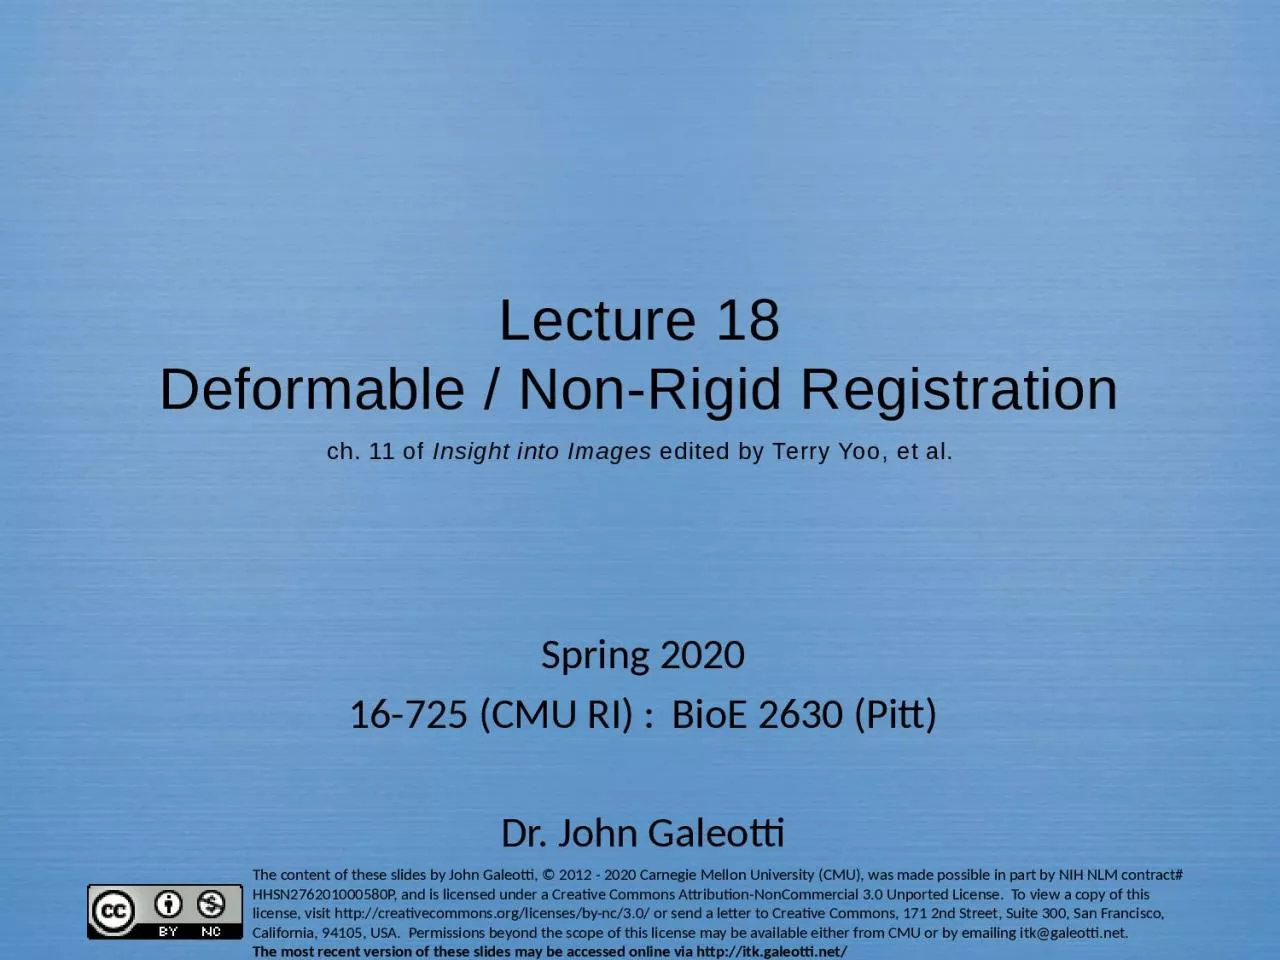 Lecture 18 Deformable / Non-Rigid Registration